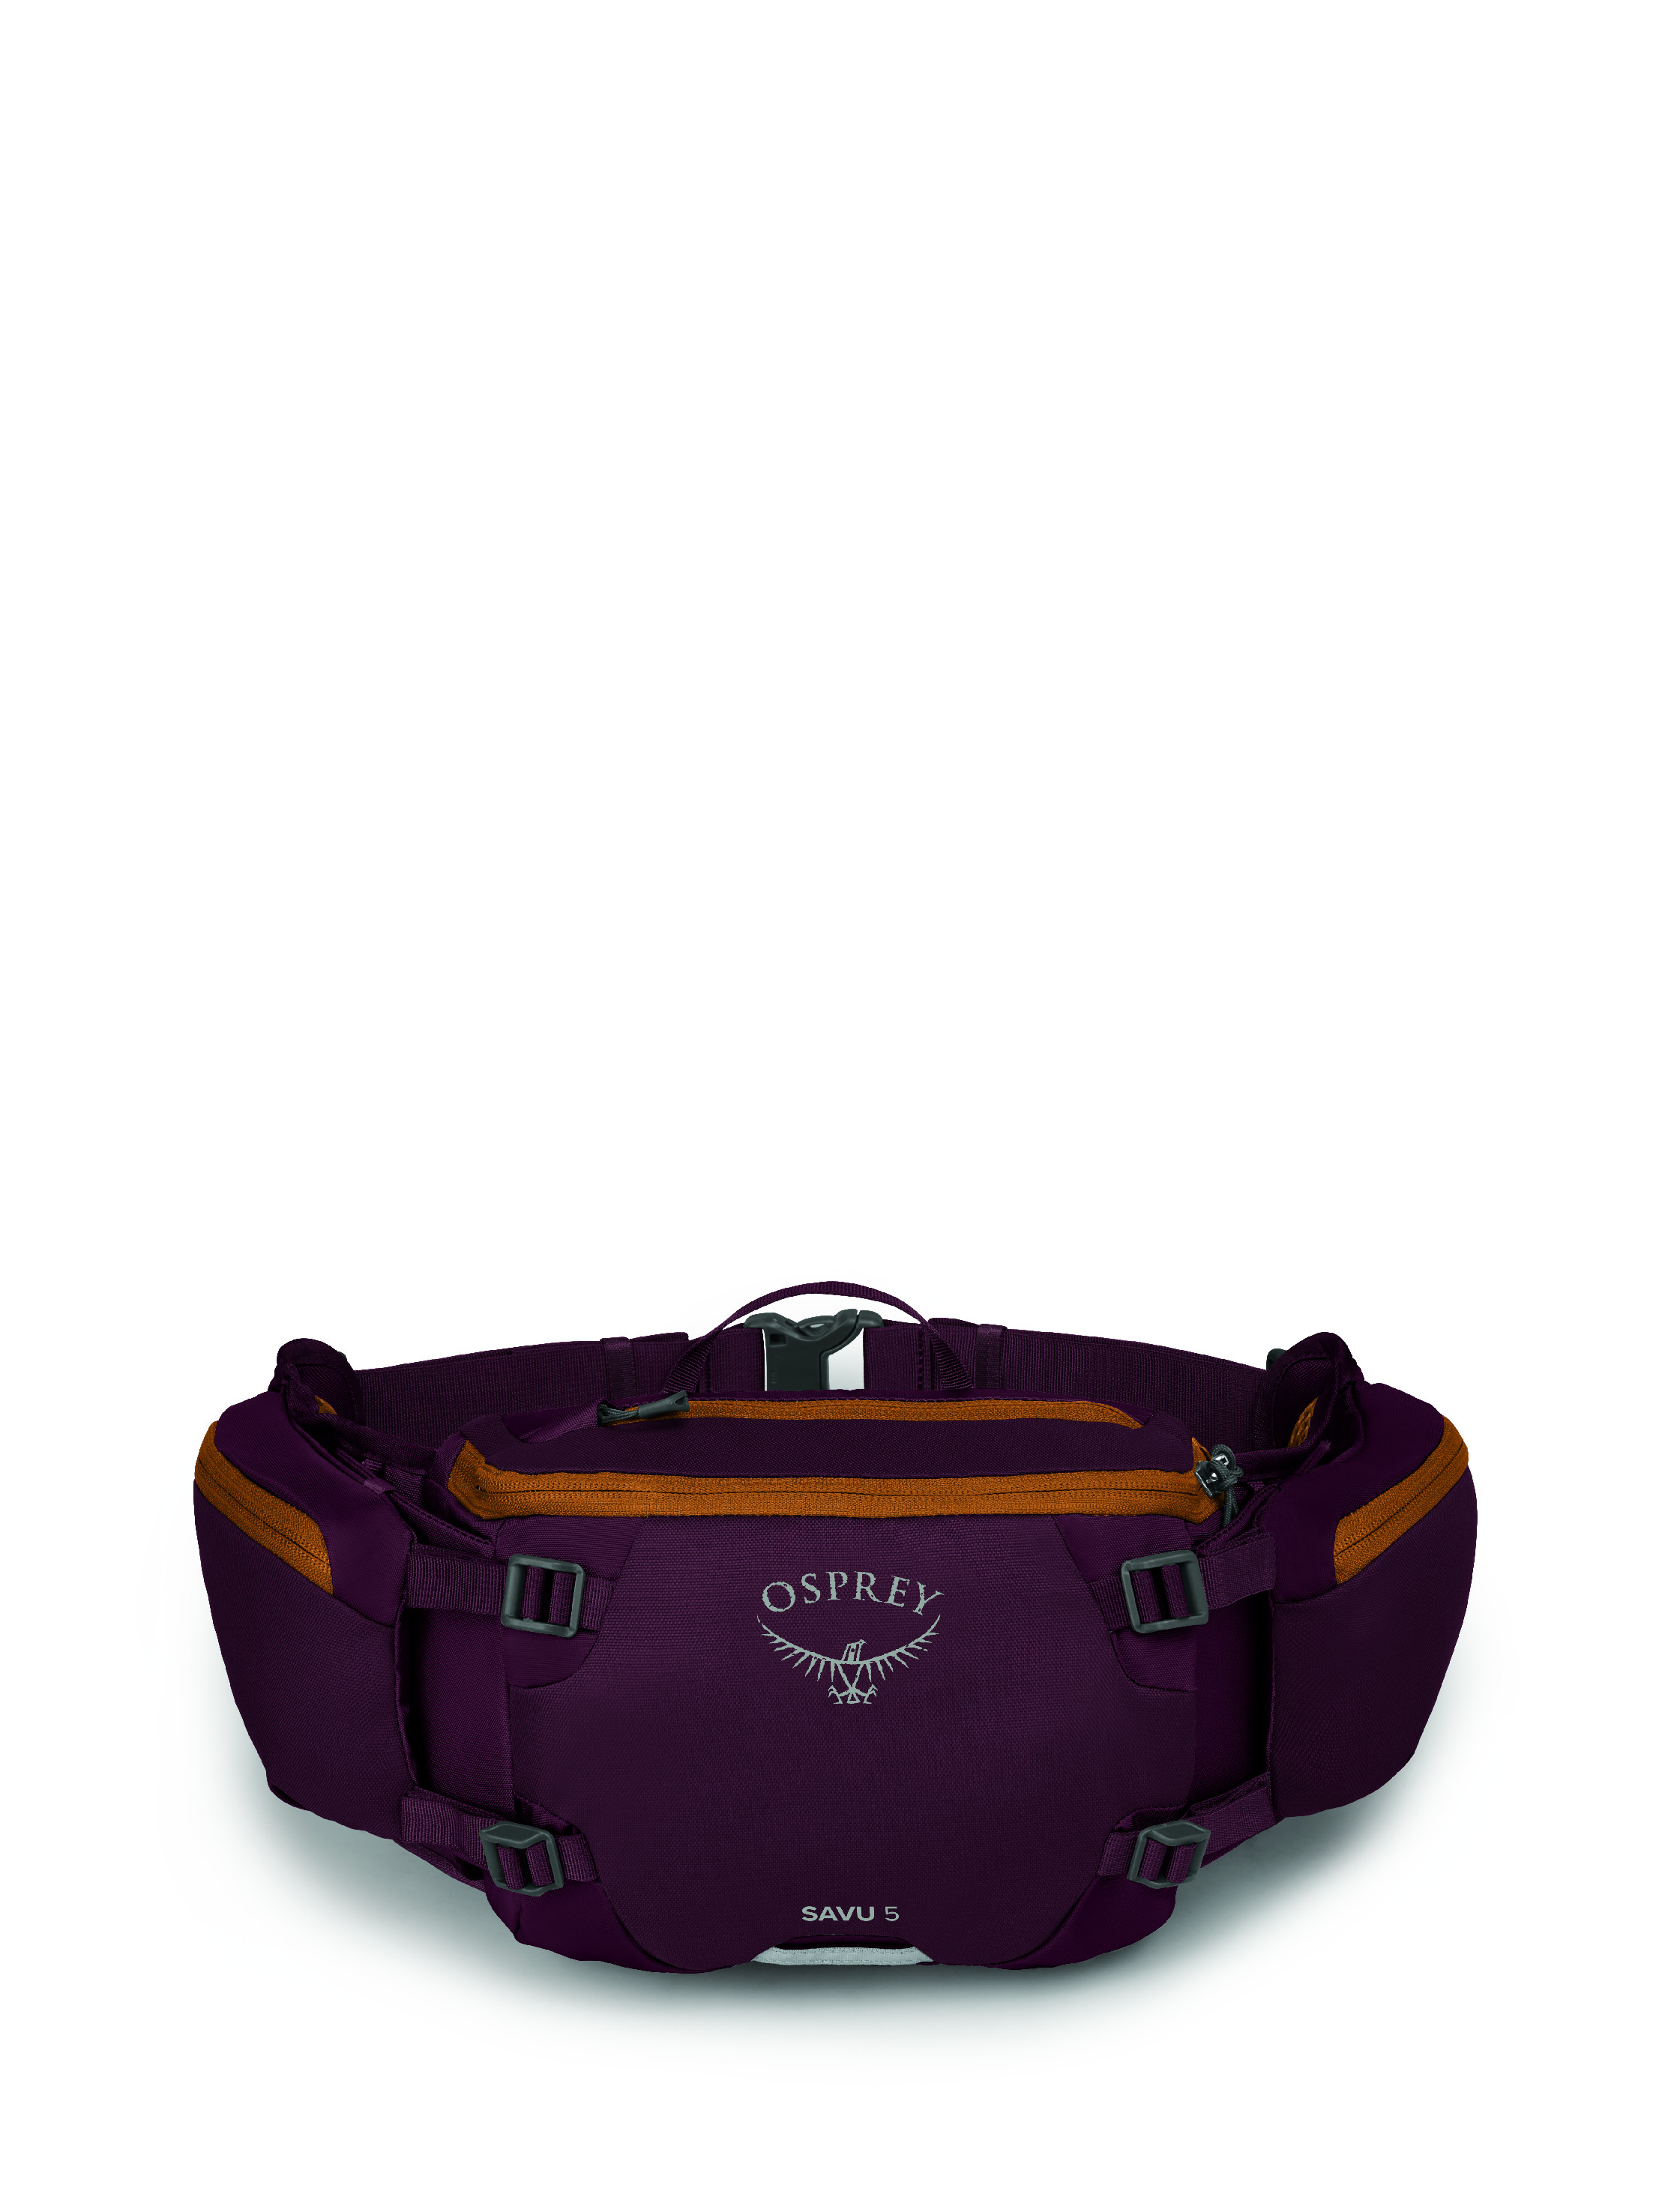 OSPREY SAVU 5 Barva: aprium purple